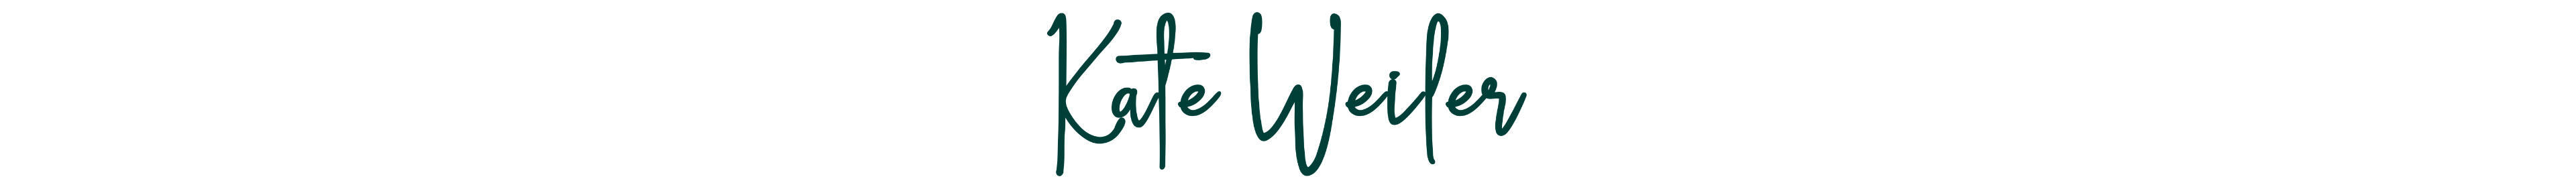 Kate Weiler Consultancy logo